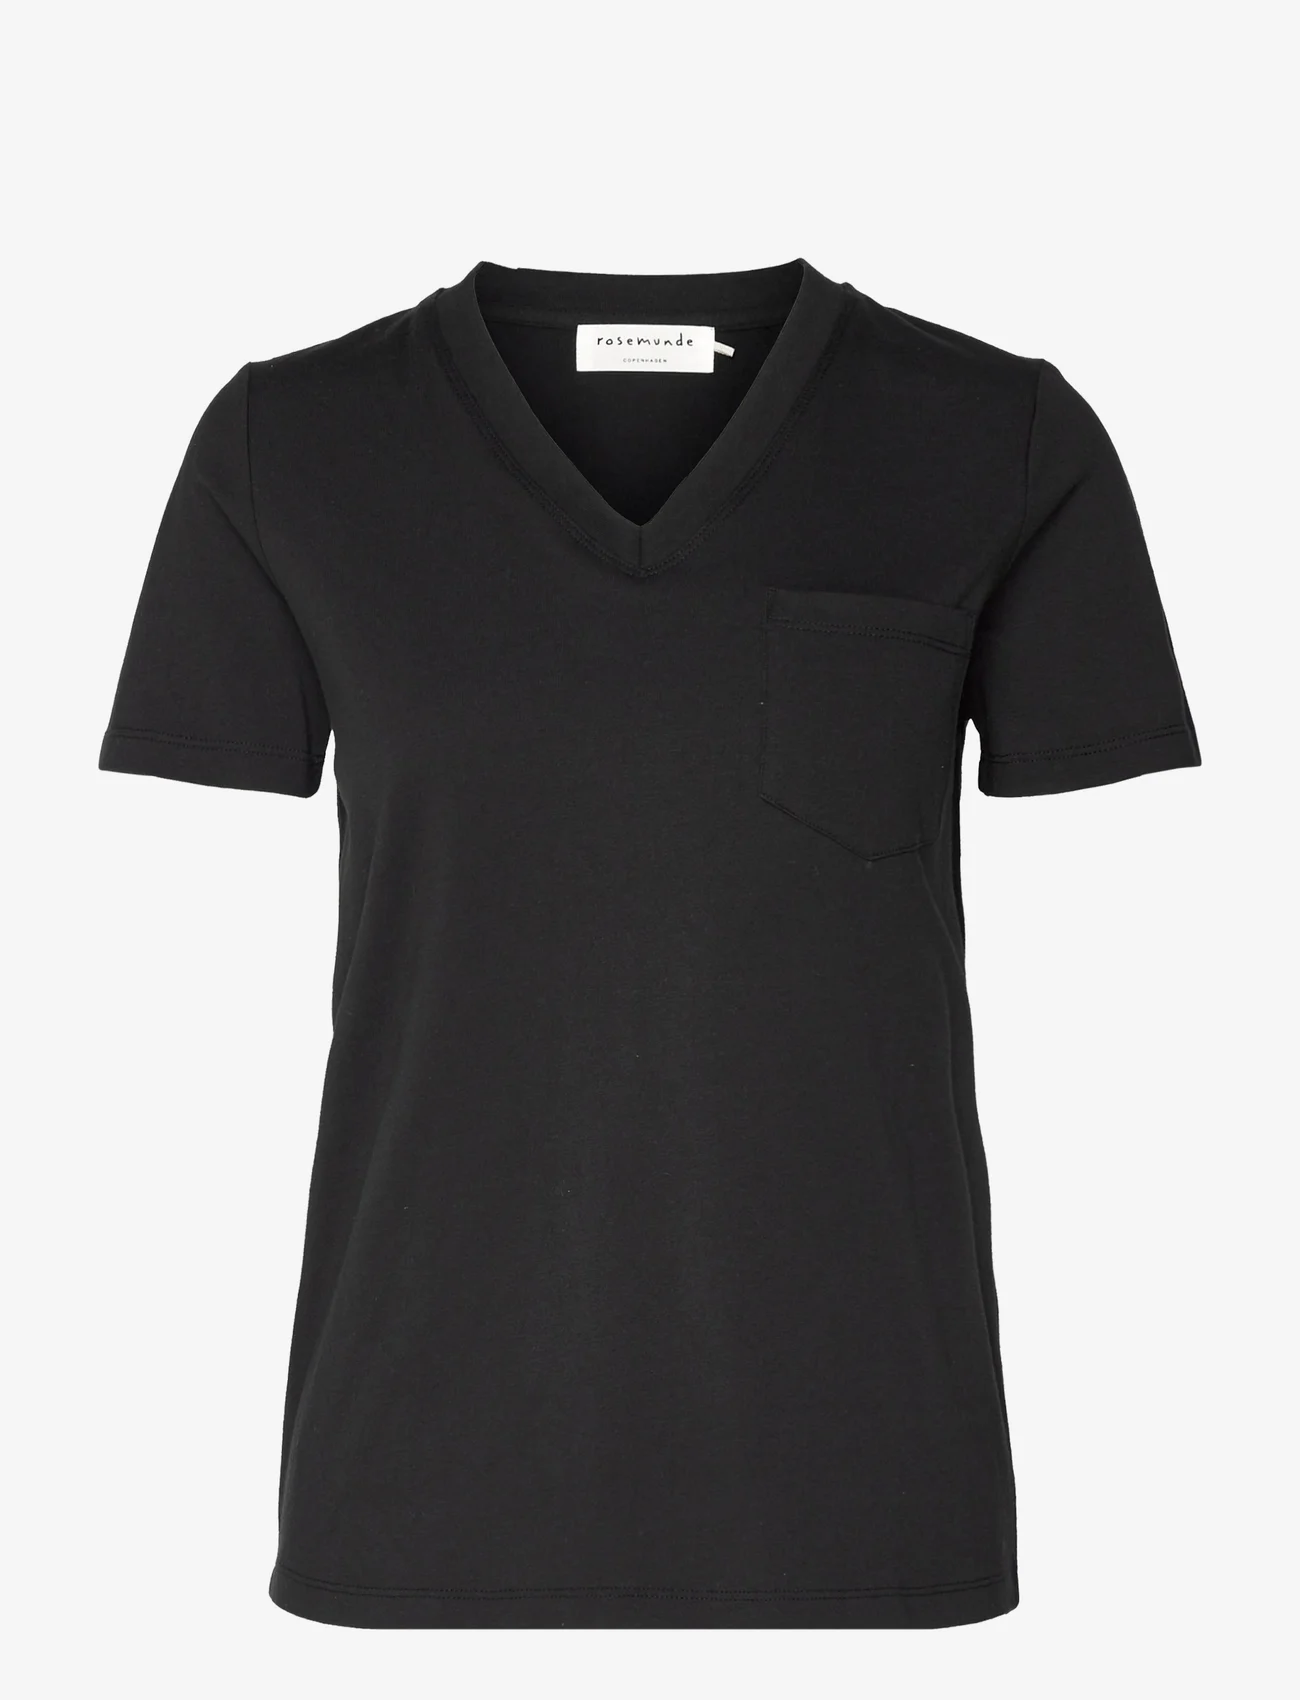 Rosemunde - Organic t-shirt - t-shirts - black - 0